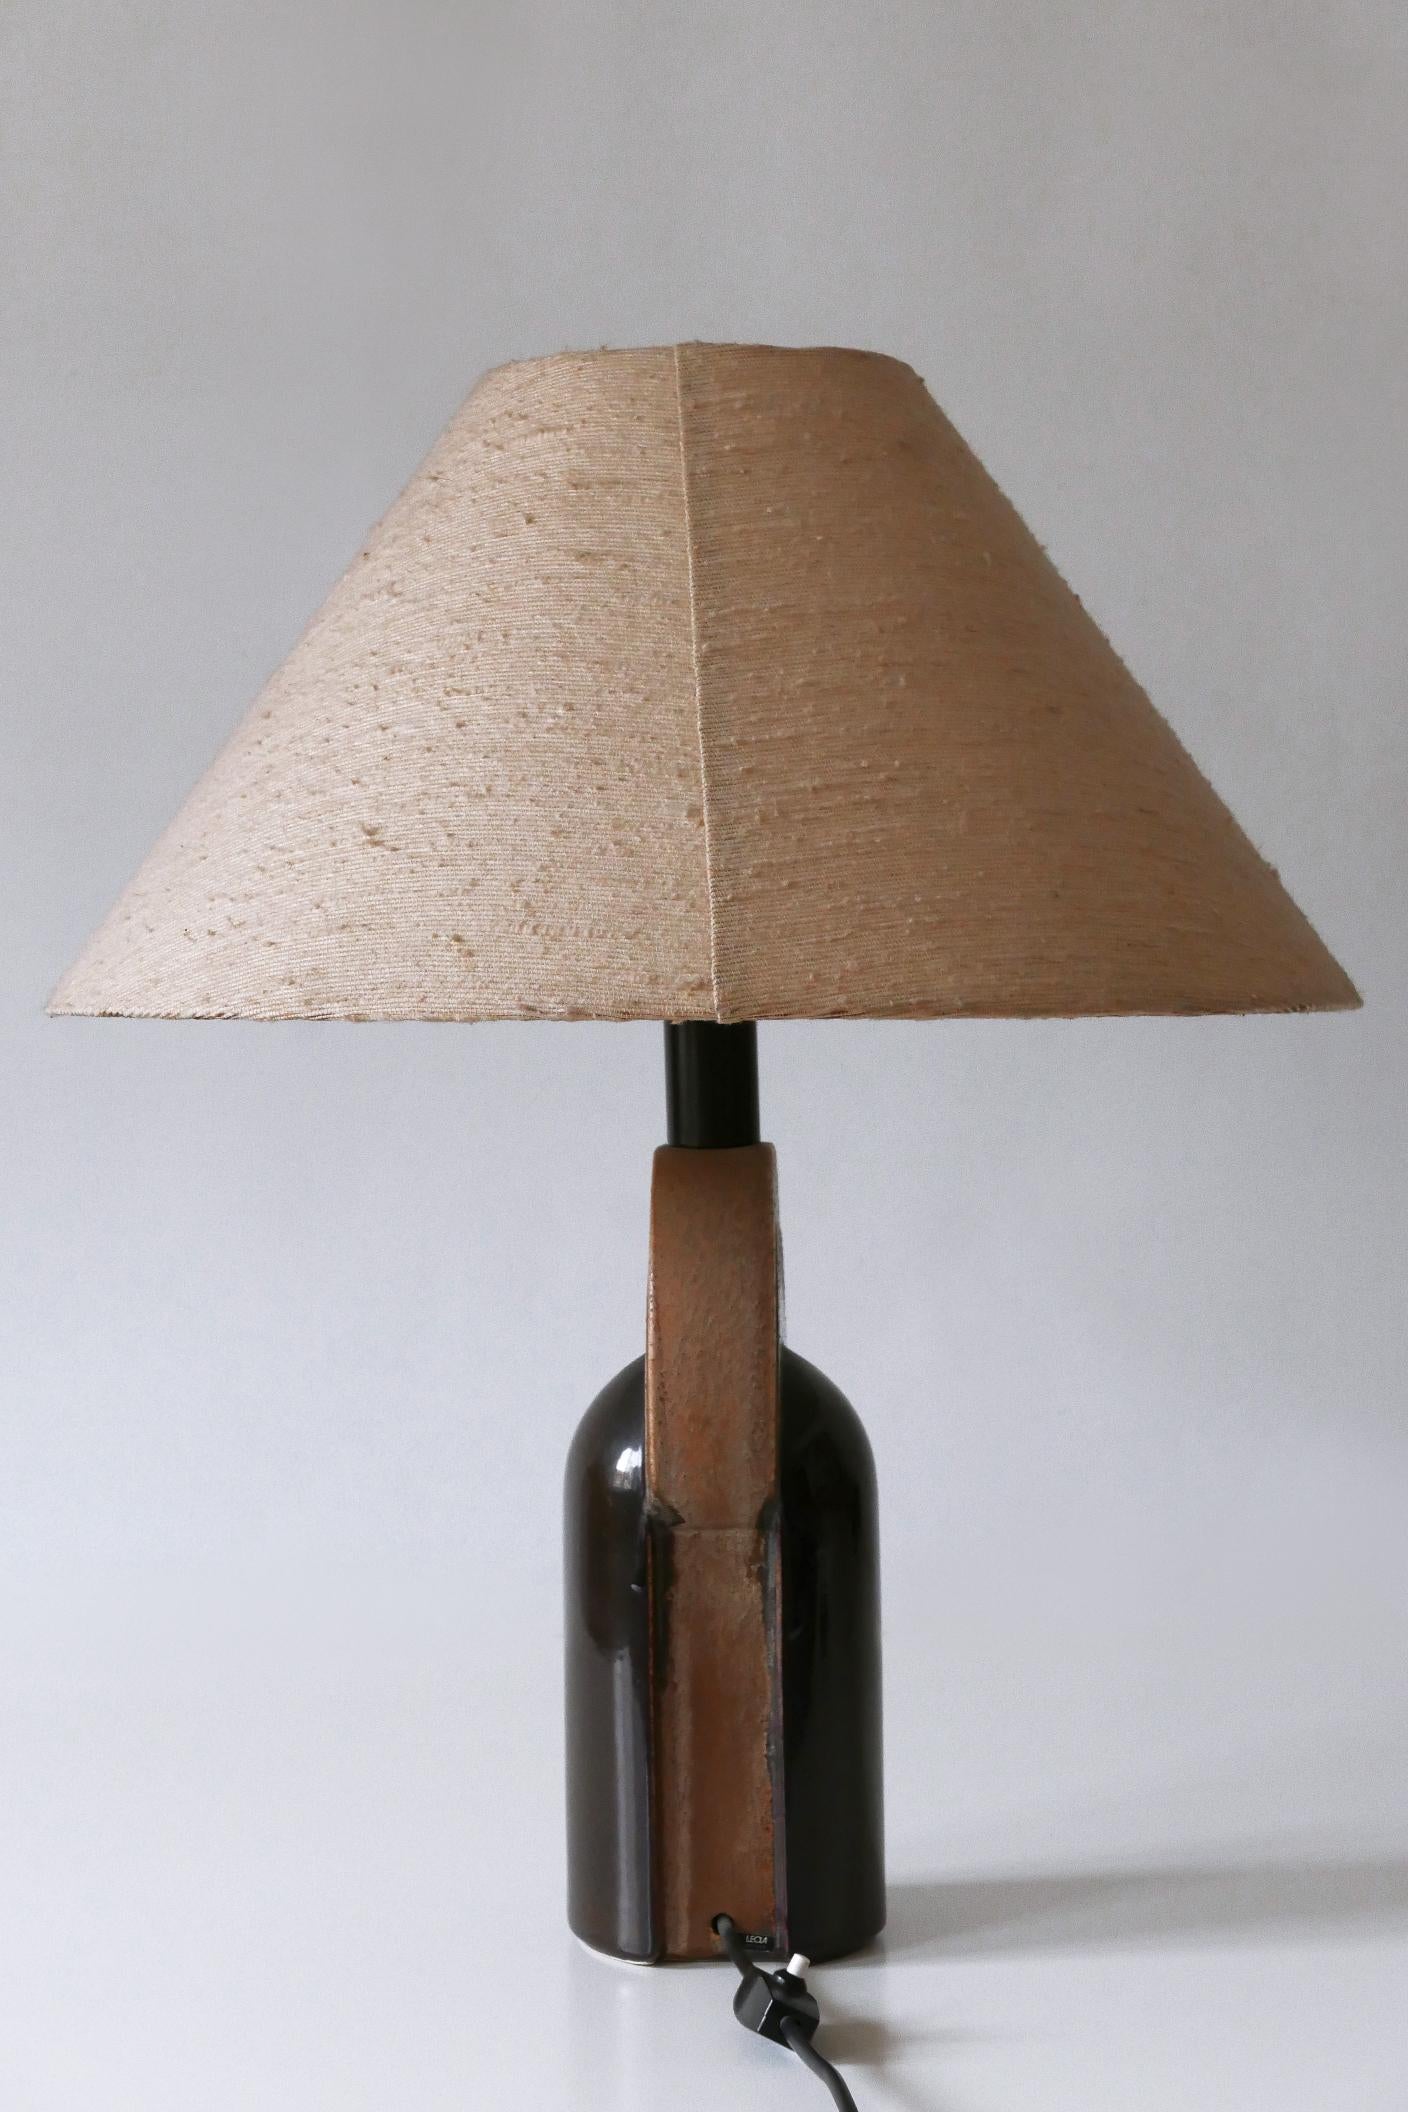 Elegant Mid-Century Modern Ceramic Table Lamp by Leola Design Germany 1960s For Sale 11